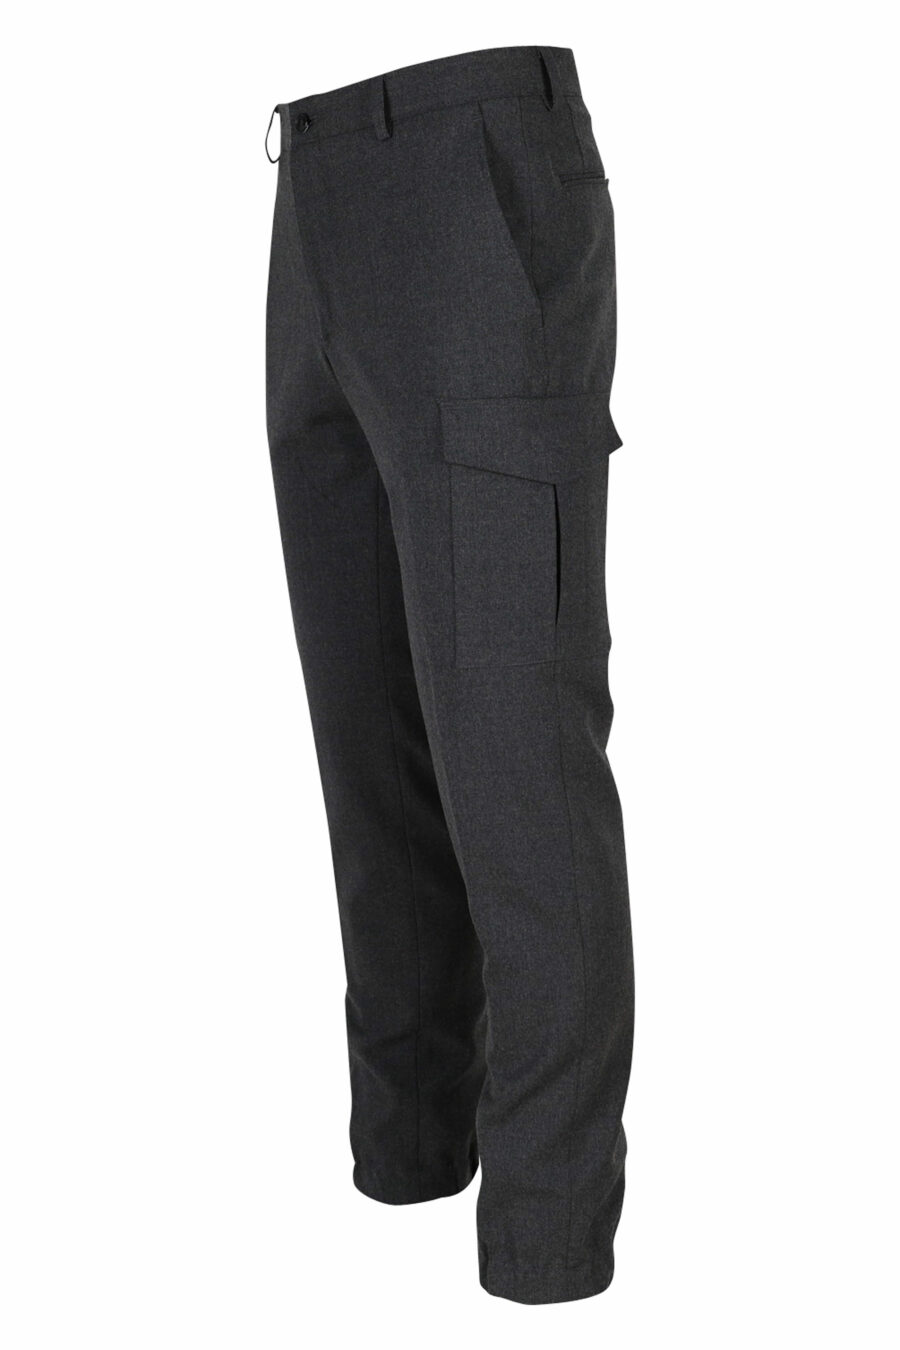 Pantalón de traje gris - 4062226397018 13